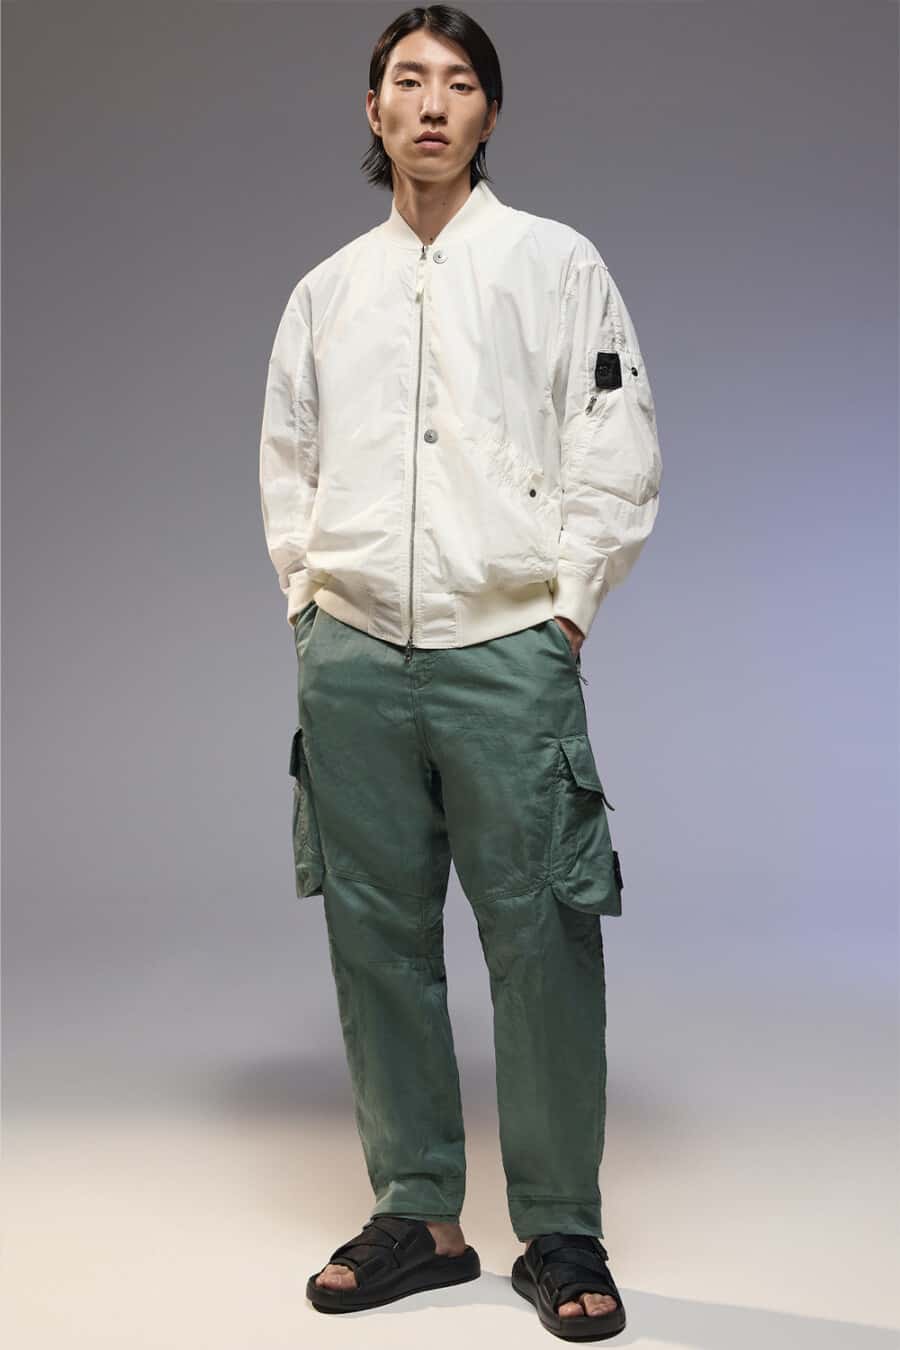 Men's technical nylon combat pants, nylon white bomber jacket and technical black slider sandals outfit